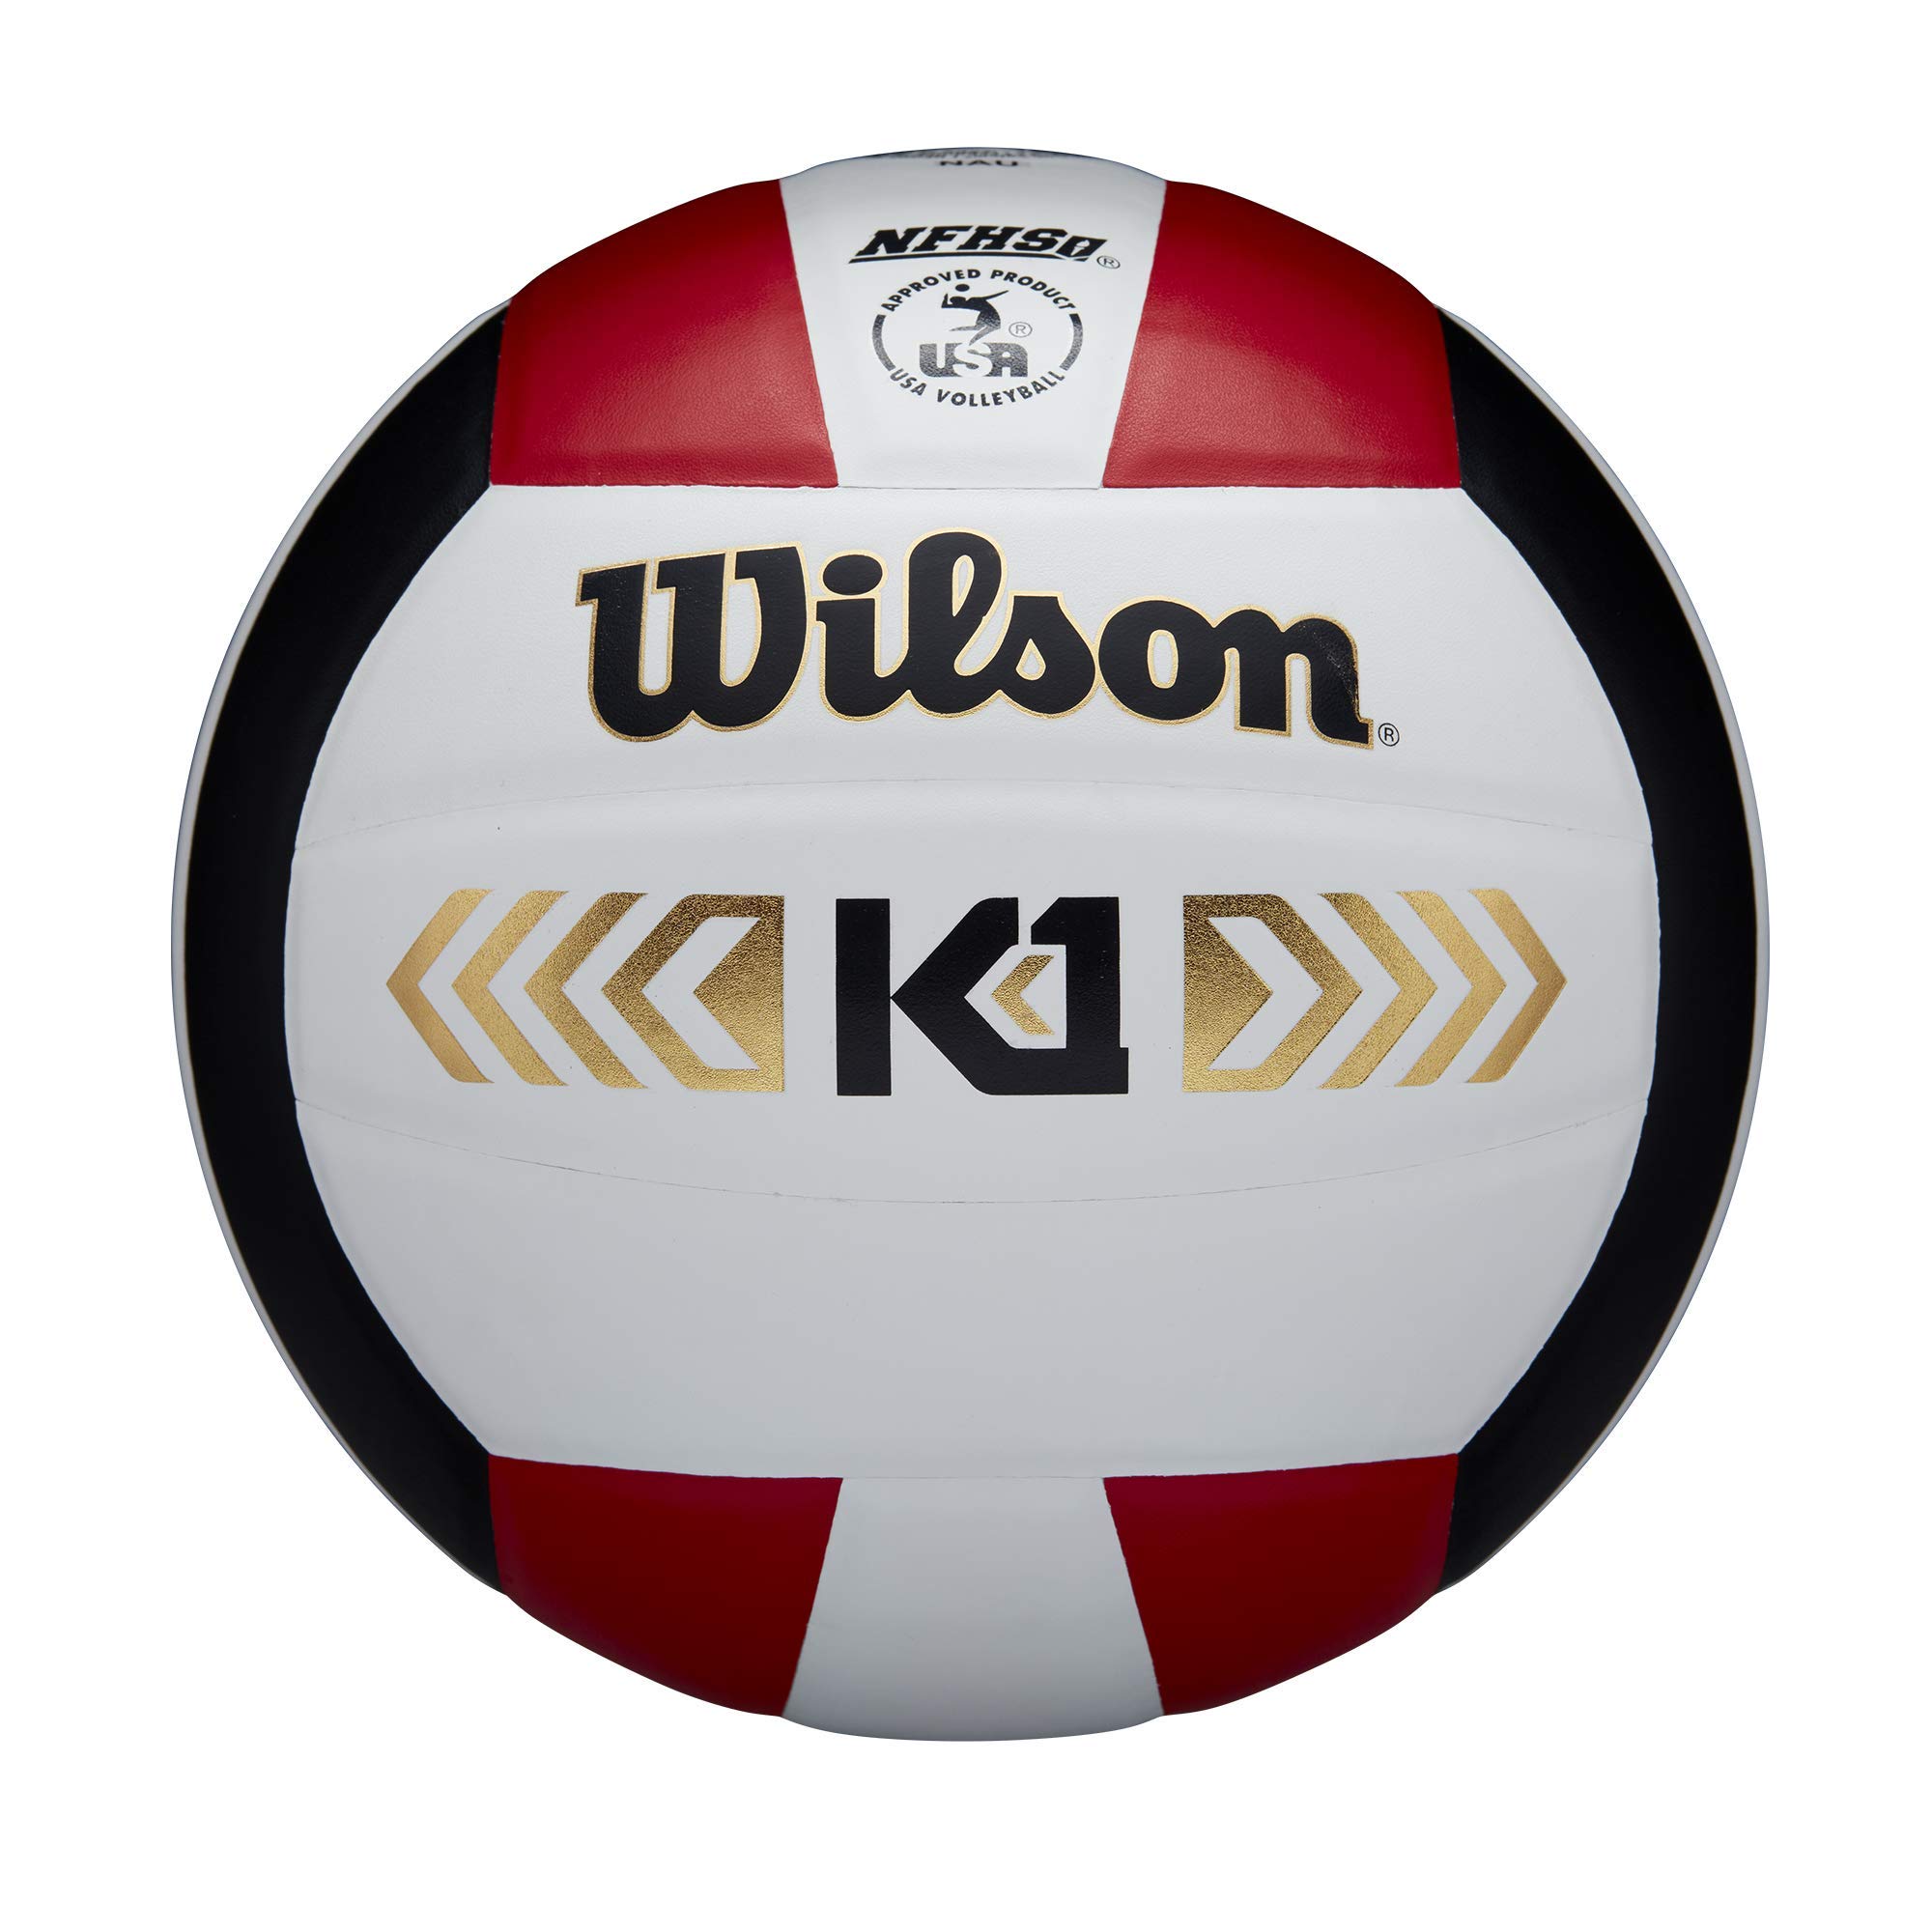 Wilson K1 Gold High Performance Volleyball